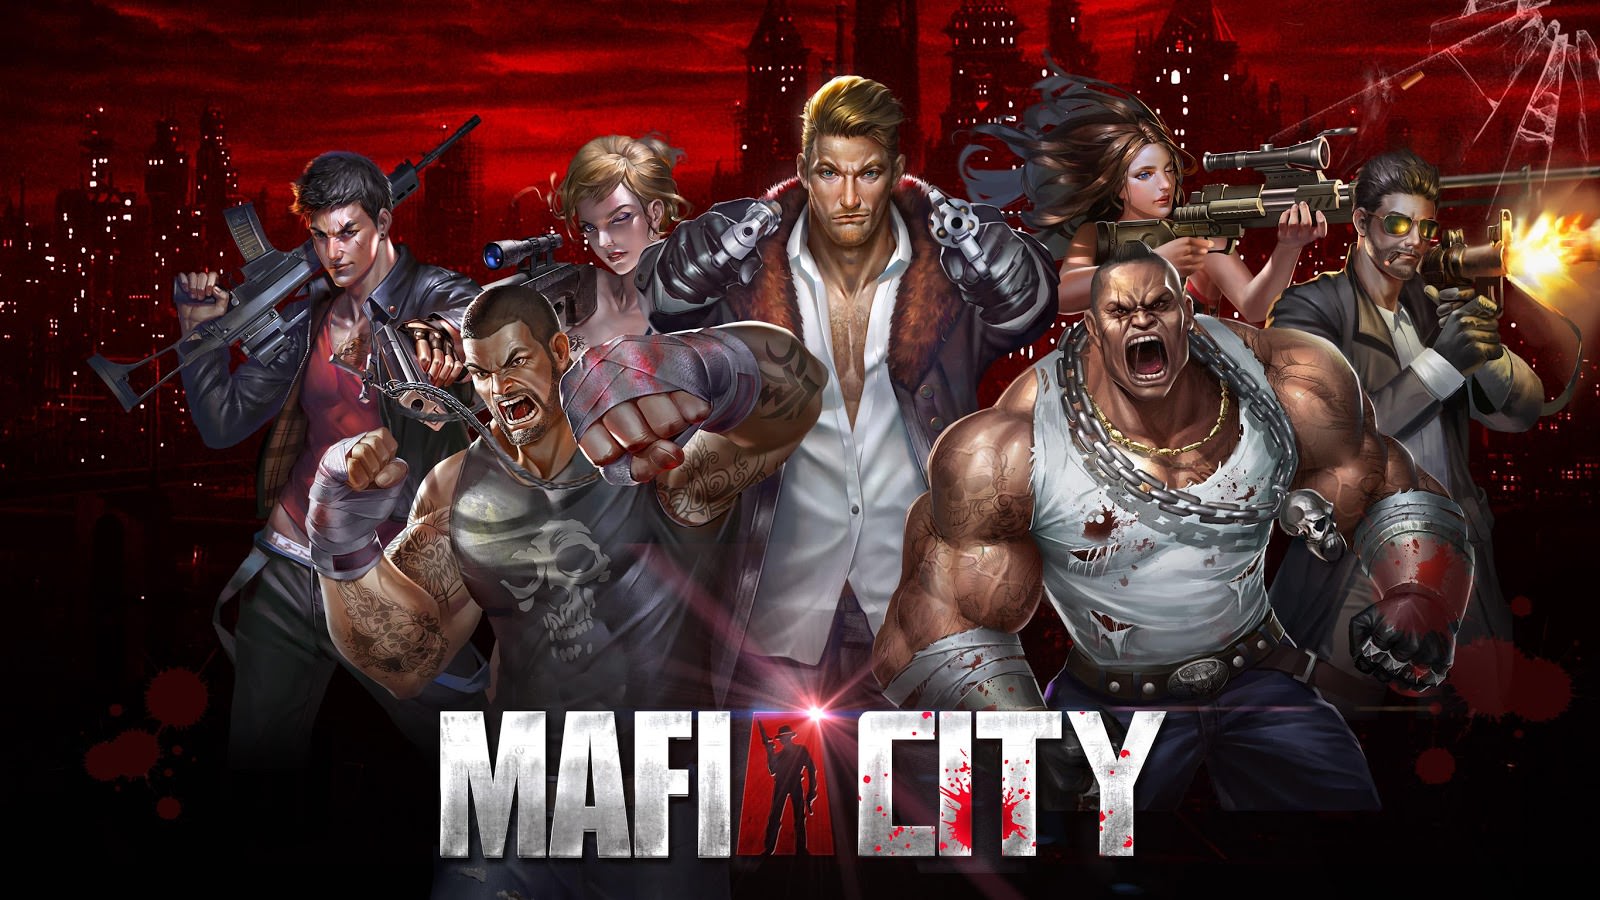 Mafia City H5: borders set by the mafia bosses that controlled the territory